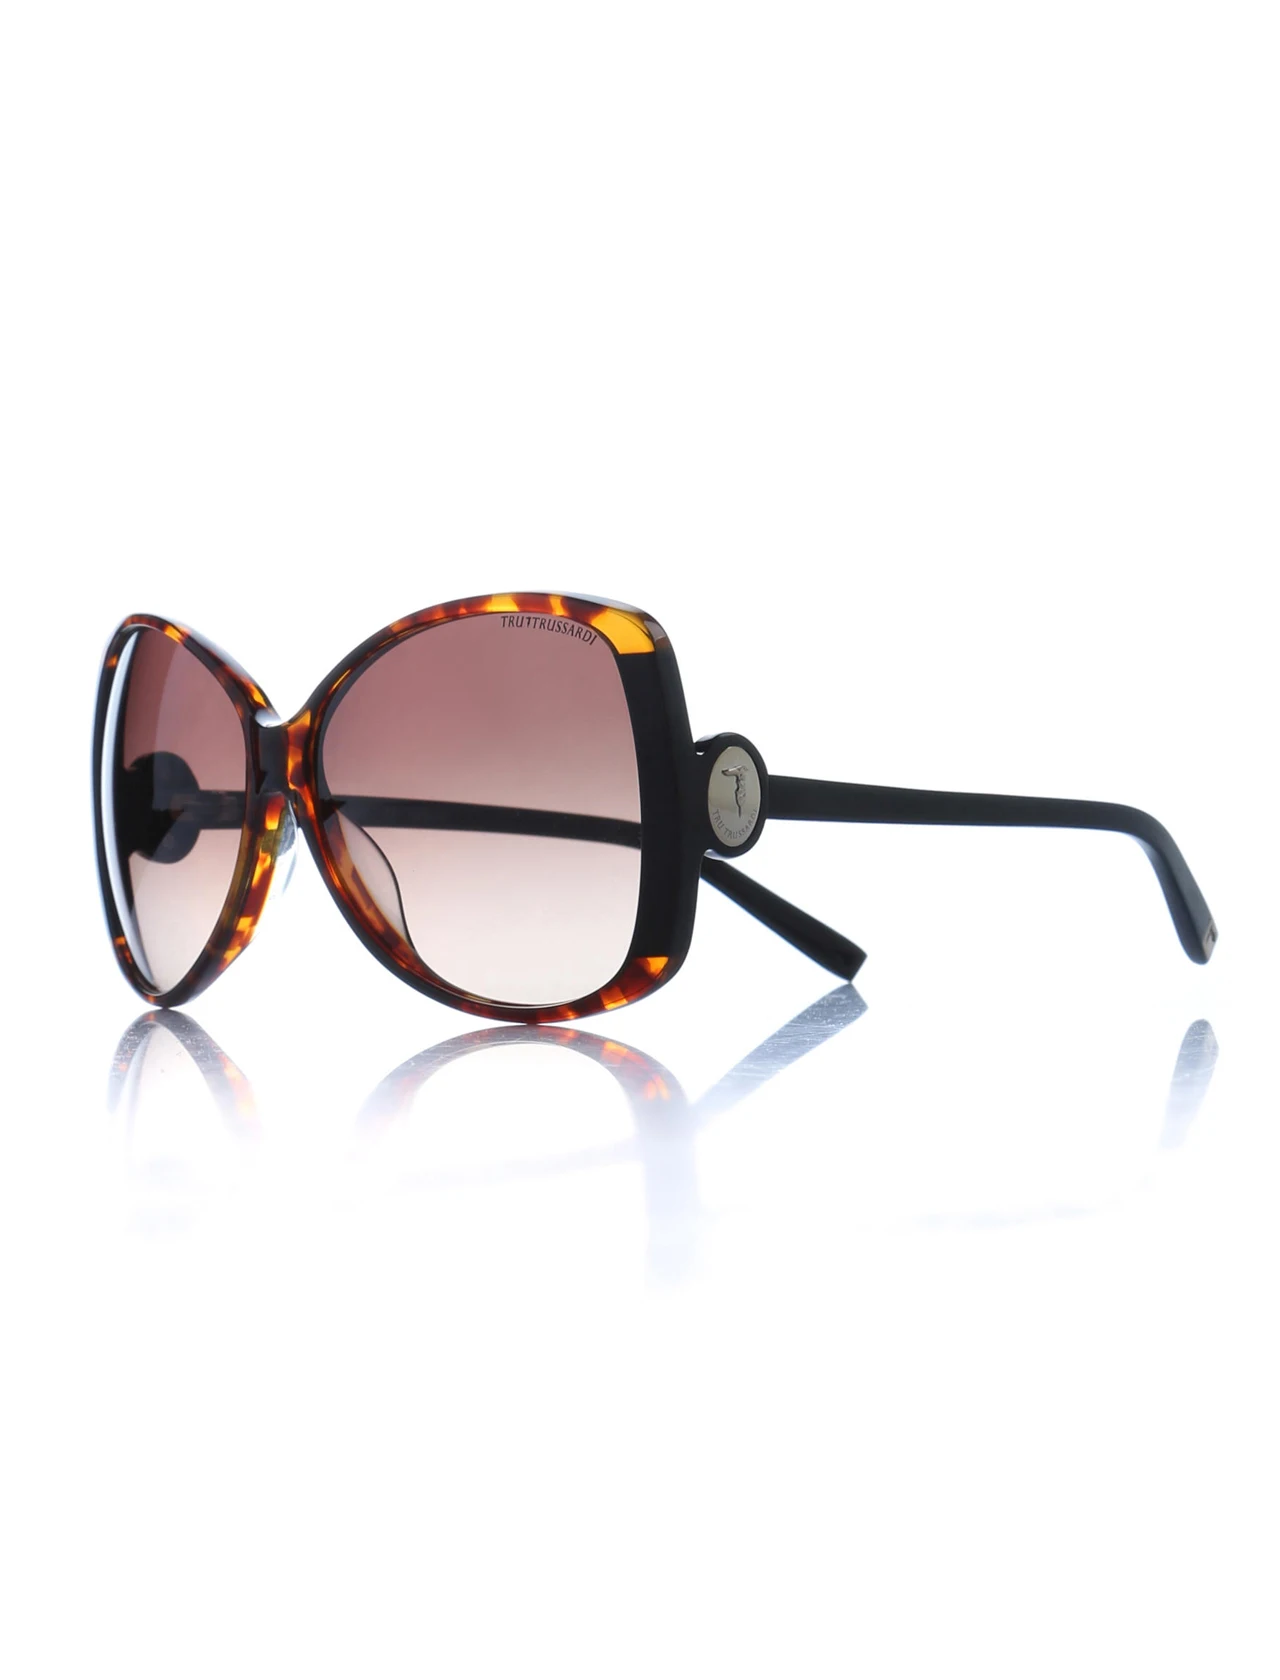 

Women's sunglasses trs 128 27 hv bone Brown organic Butterfly Square 60-14-125 trussardi